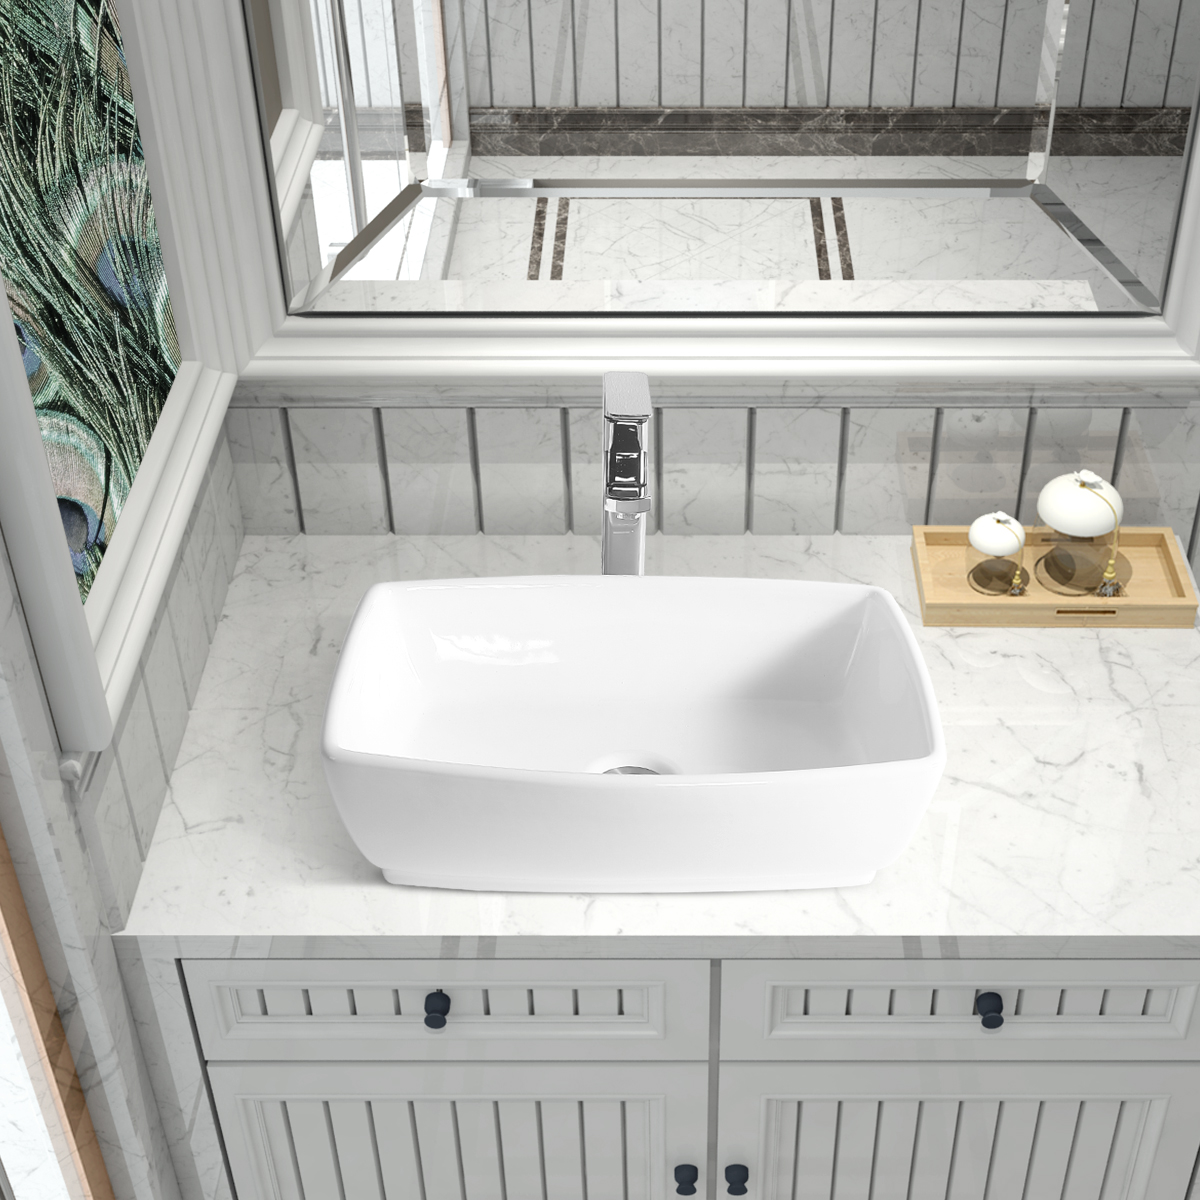 BVS1914A-OL 19" x 14" White Rectangular Ceramic Countertop Bathroom Vanity Vessel Sink